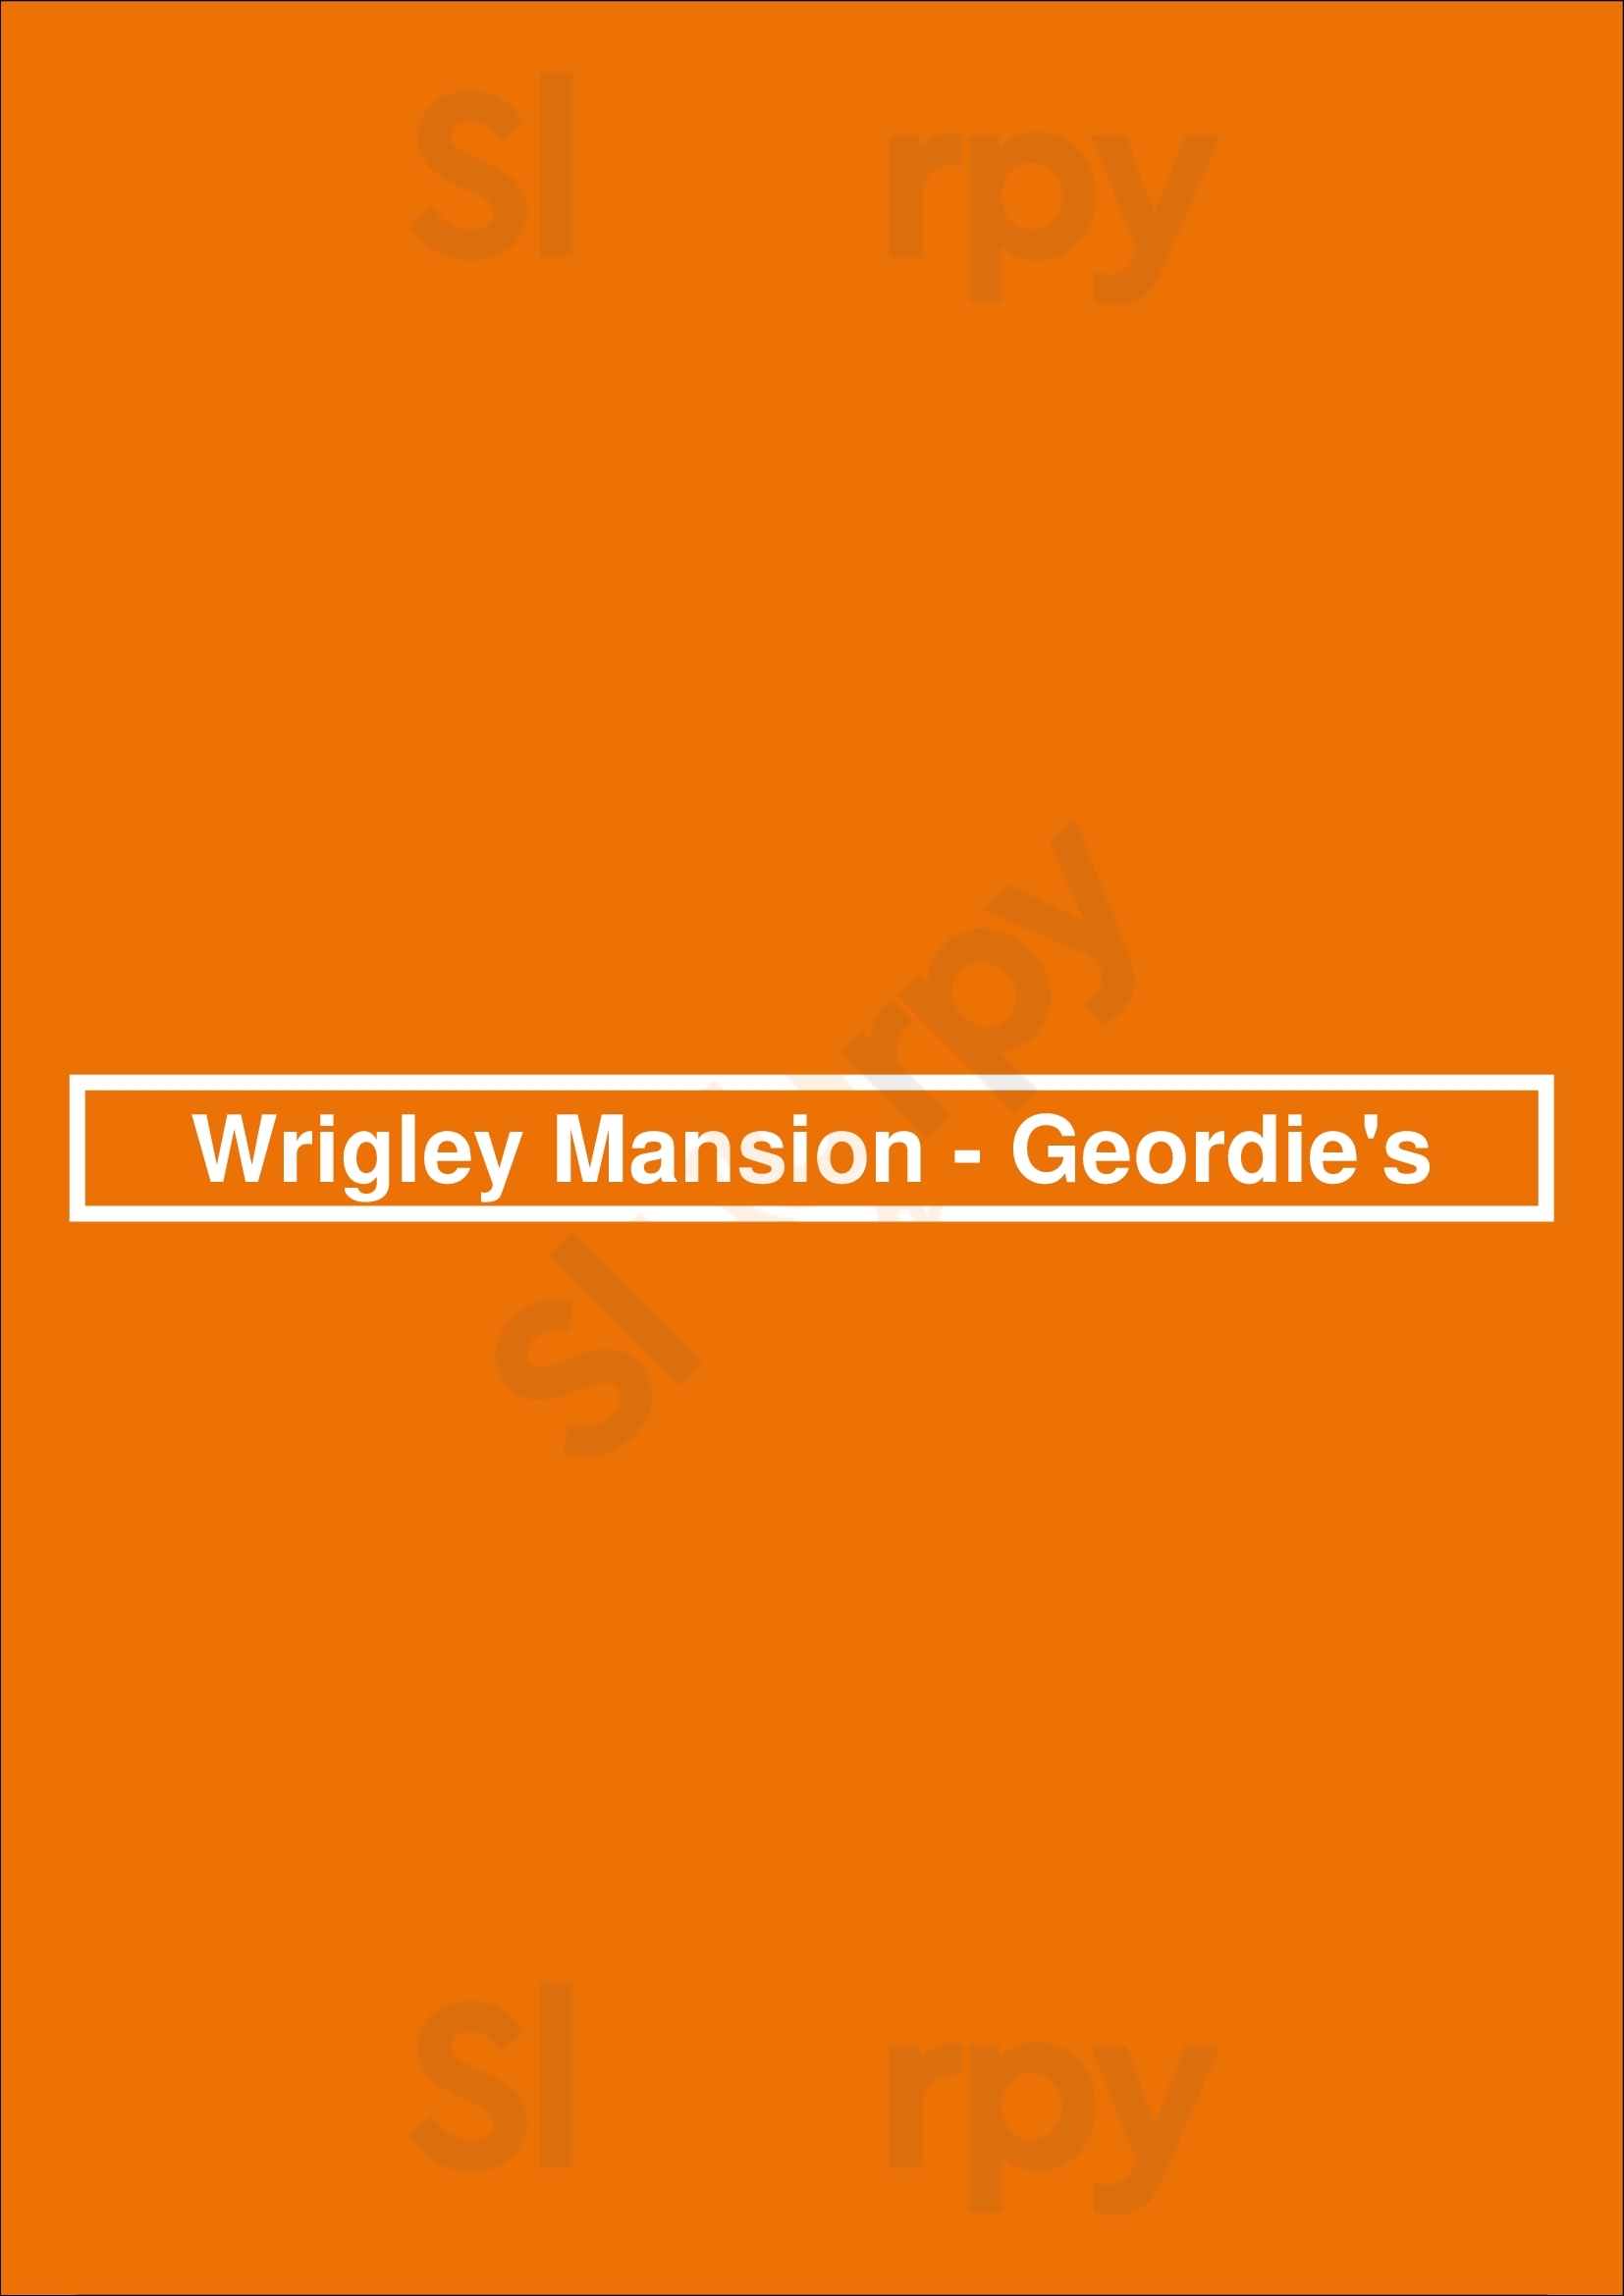 Wrigley Mansion Phoenix Menu - 1